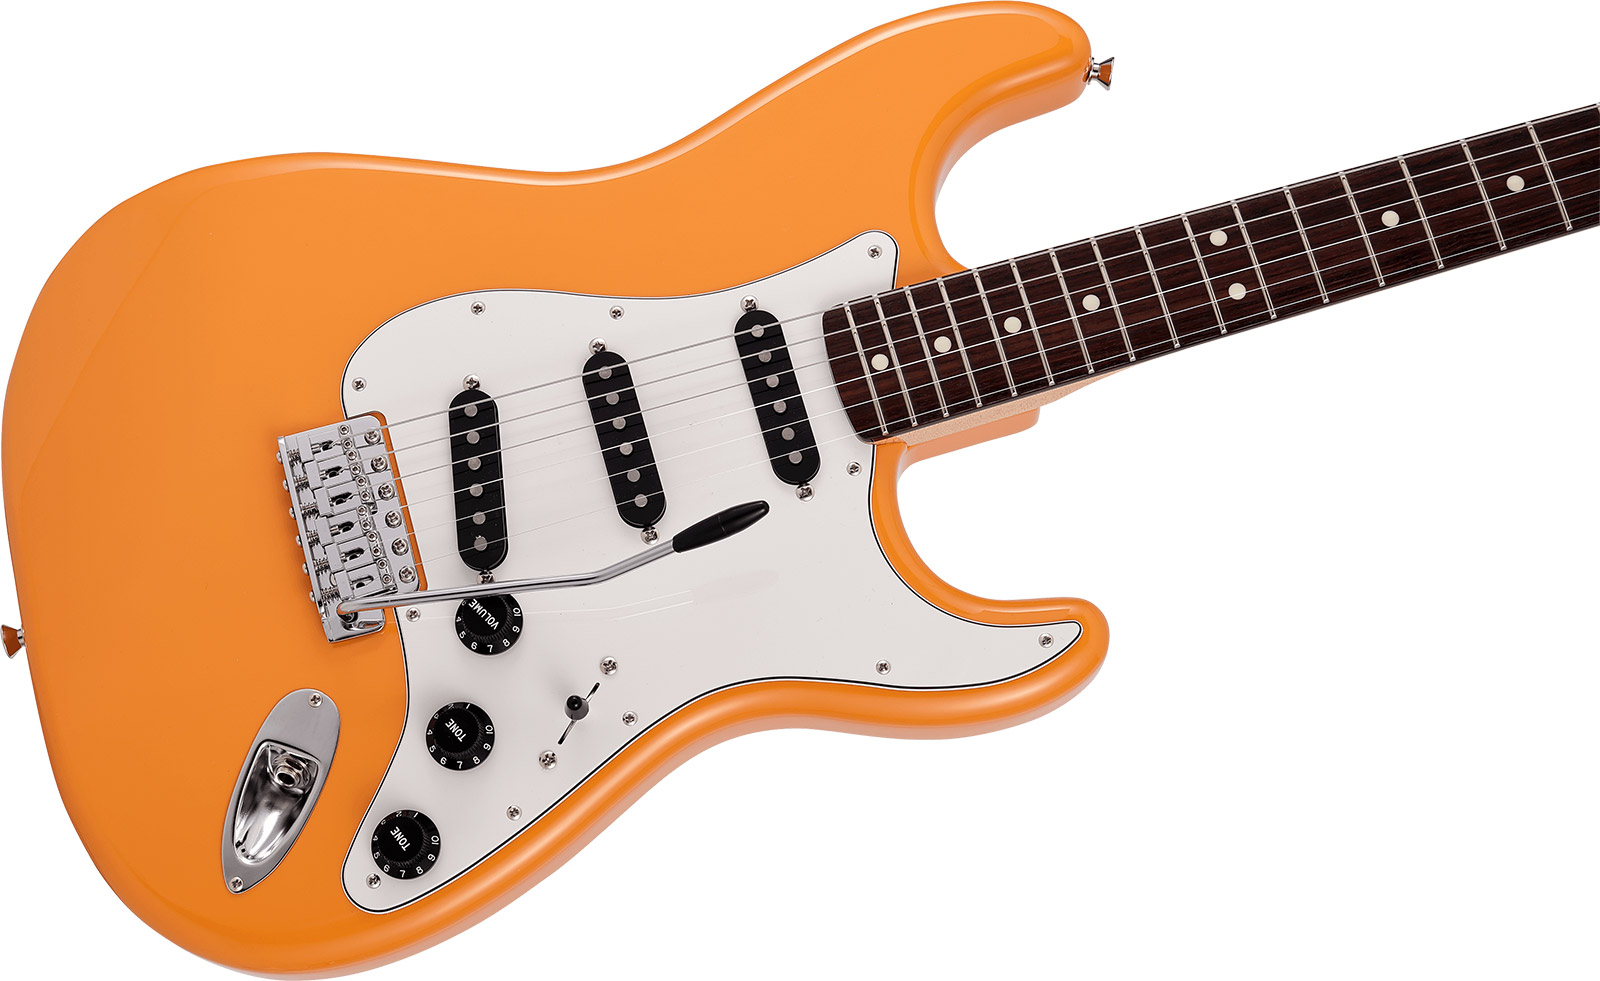 Fender Strat International Color Ltd Jap 3s Trem Rw - Capri Orange - Guitarra eléctrica con forma de str. - Variation 2